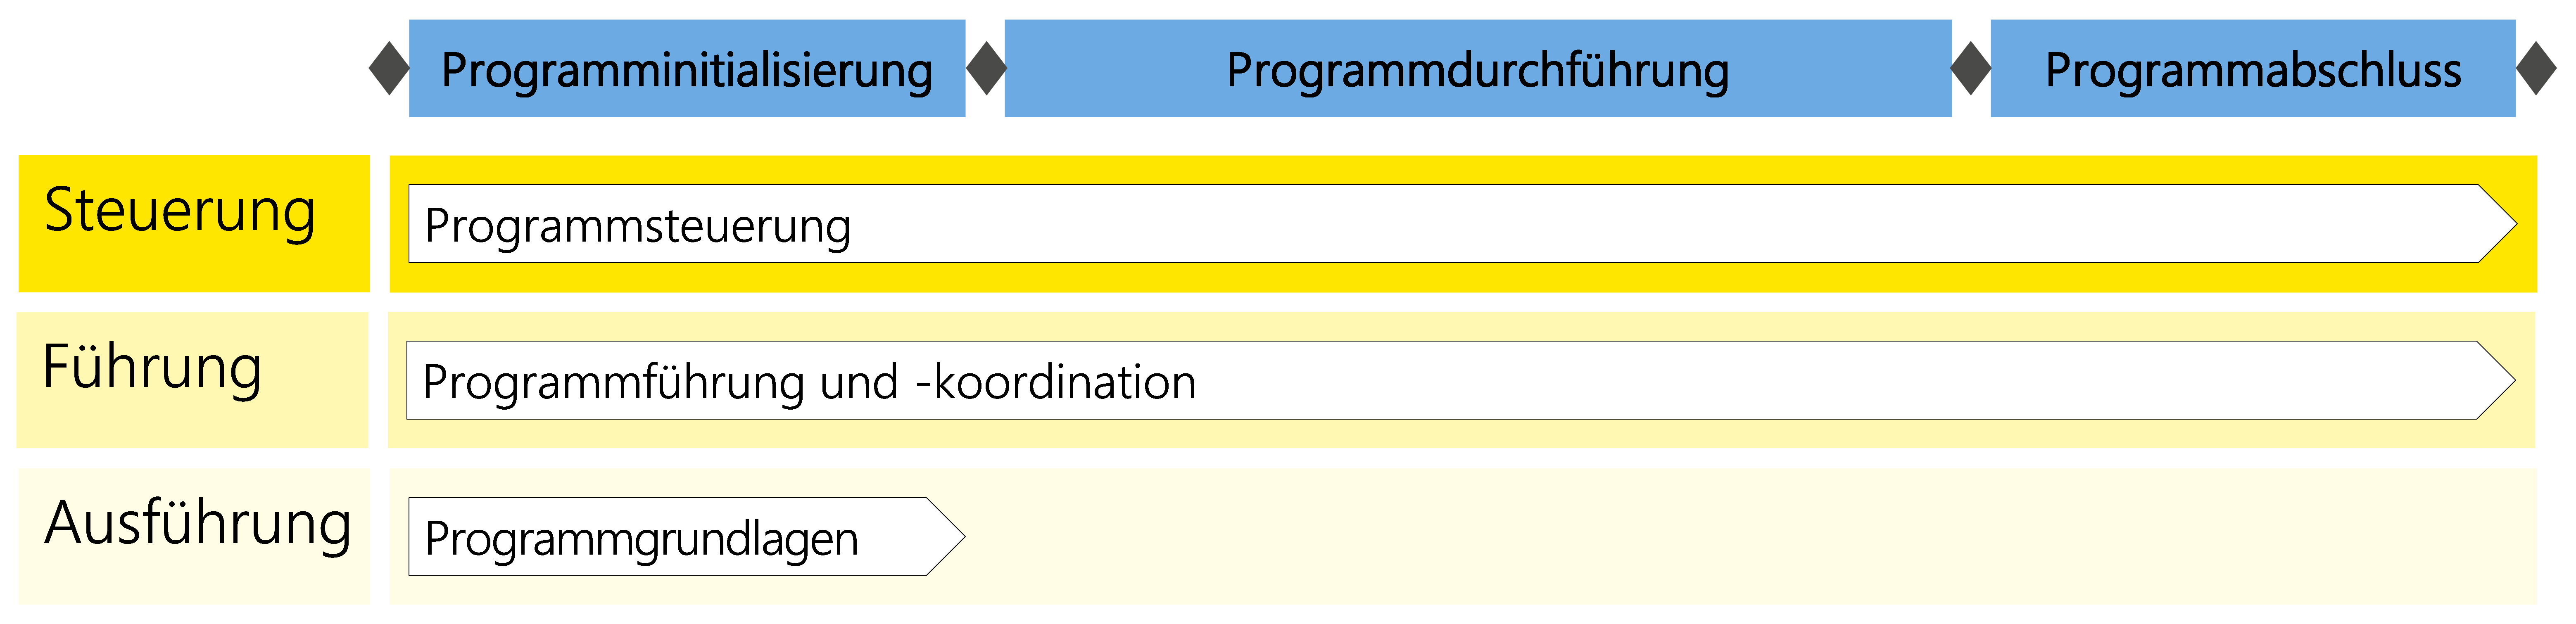 Abbildung 41: Standardmässig verfügbare HERMES-Programm-Module im Gesamtkontext